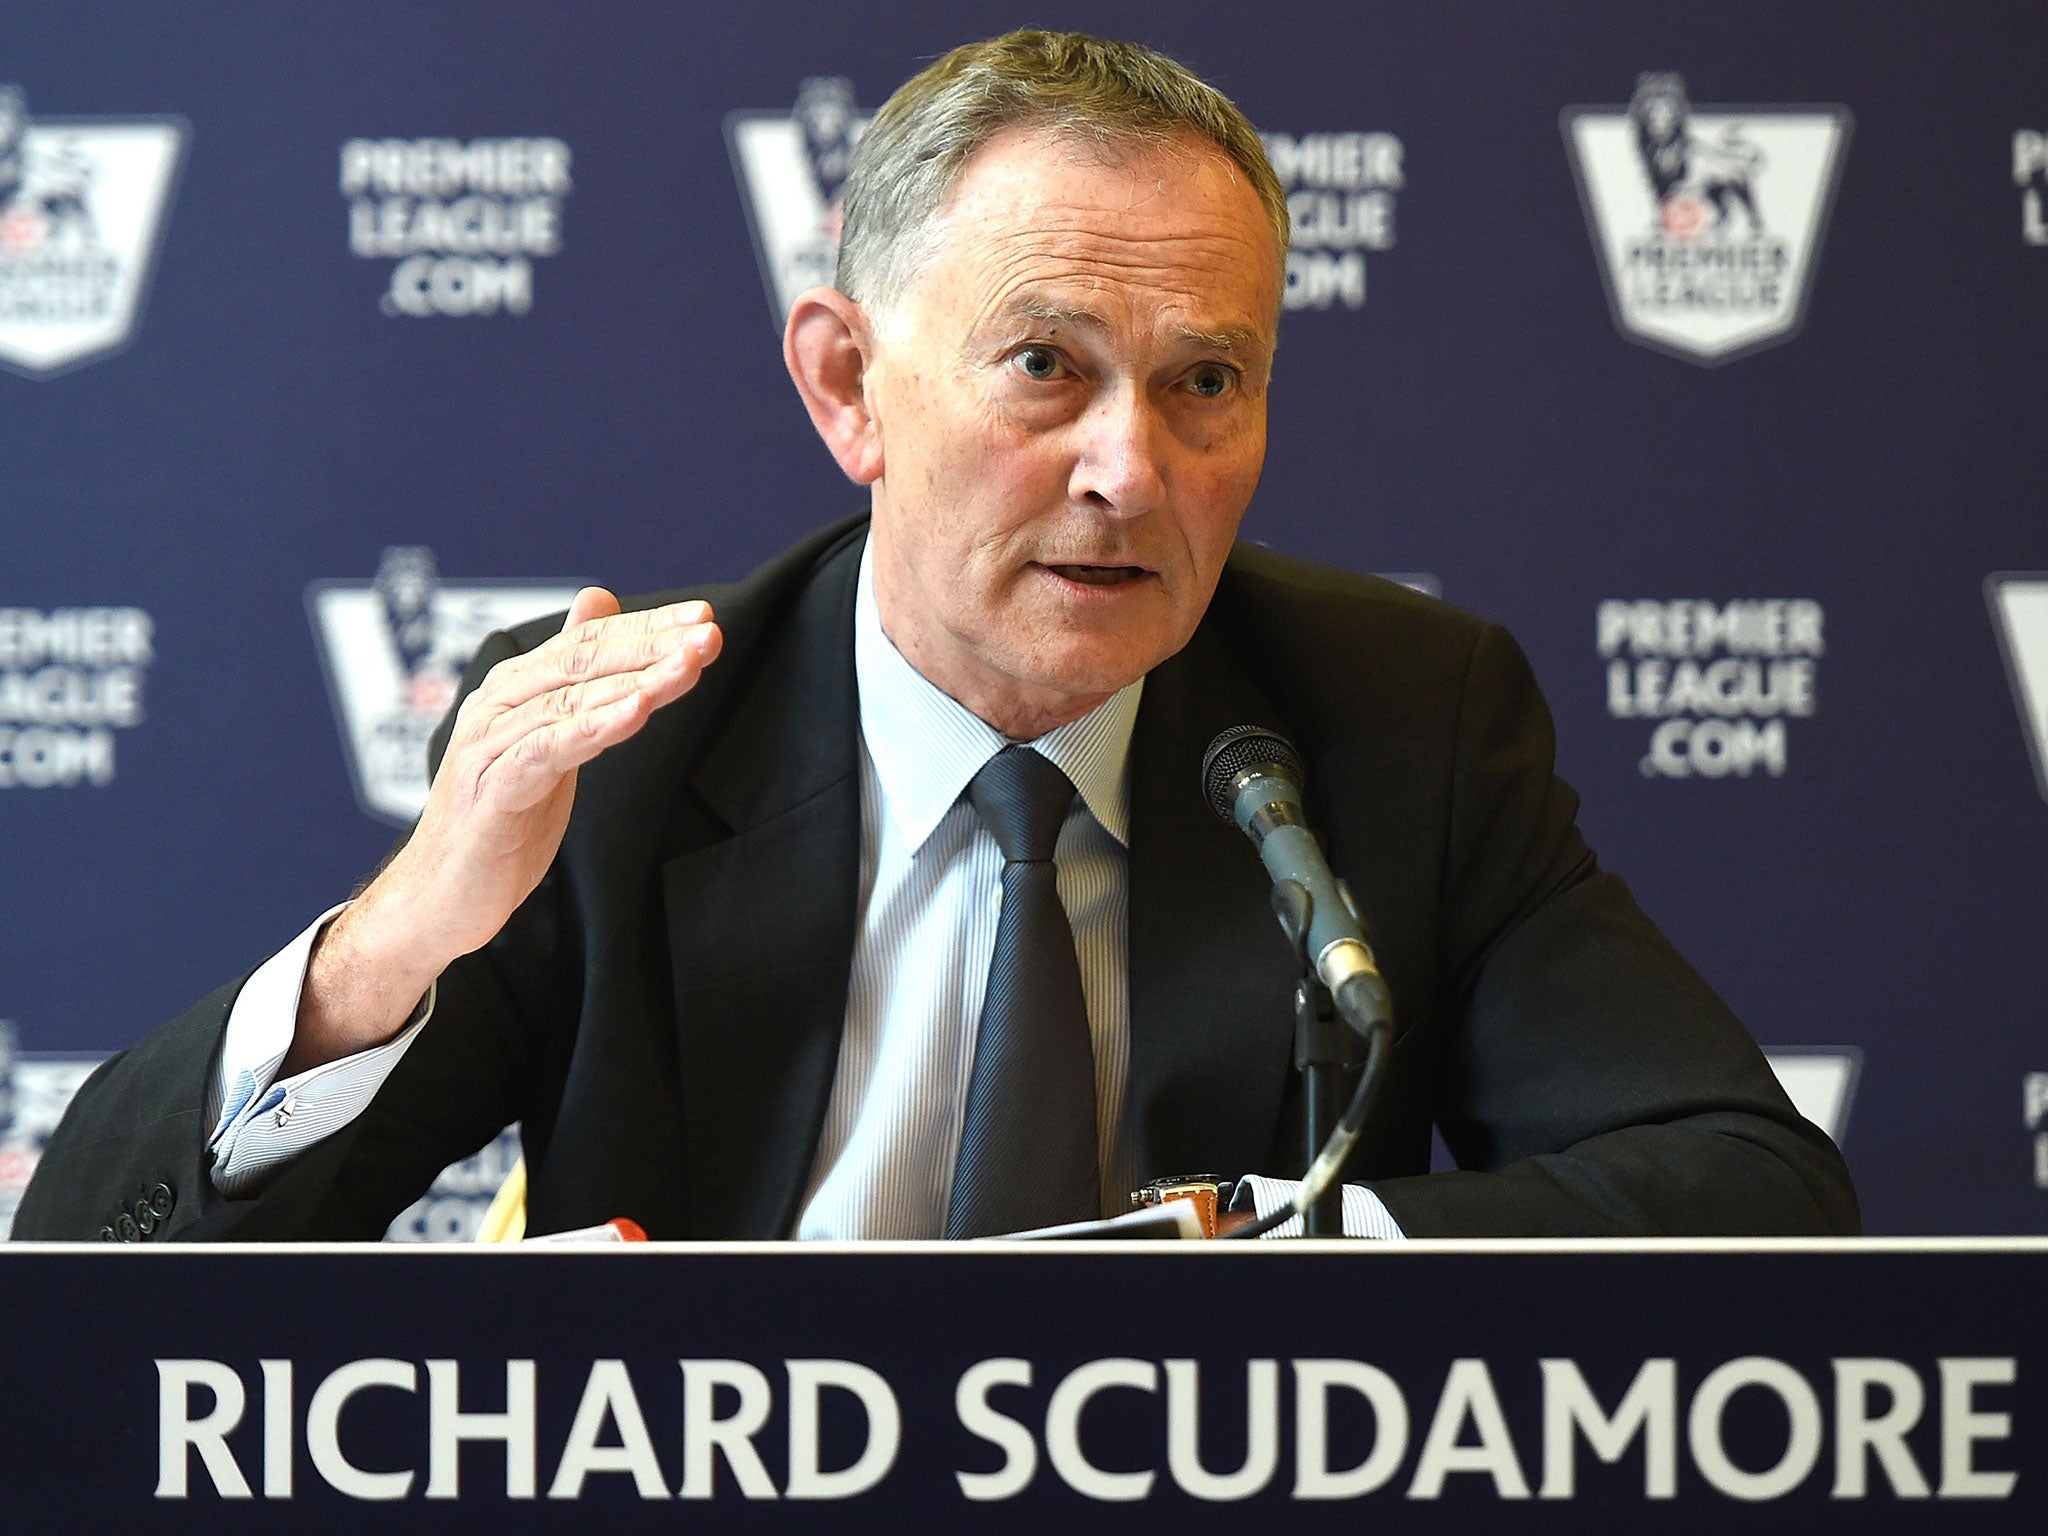 Premier League chief executive Richard Scudamore